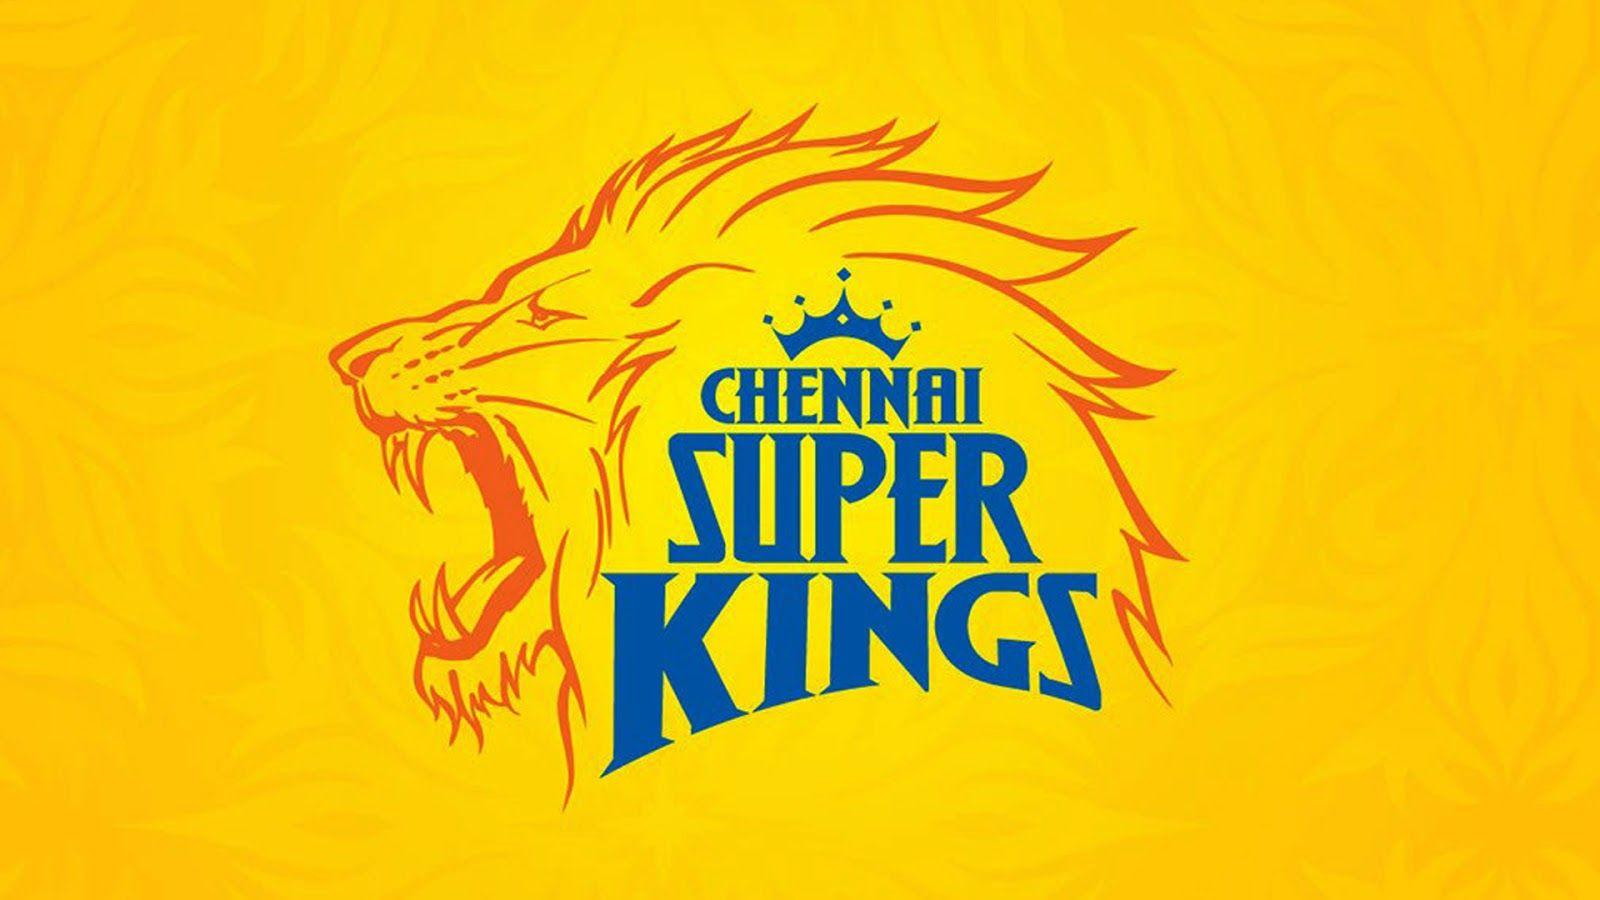 Chennai Super Kings HD Wallpaper Download Free 1080p. Chennai super kings, Dhoni wallpaper, Ms dhoni wallpaper